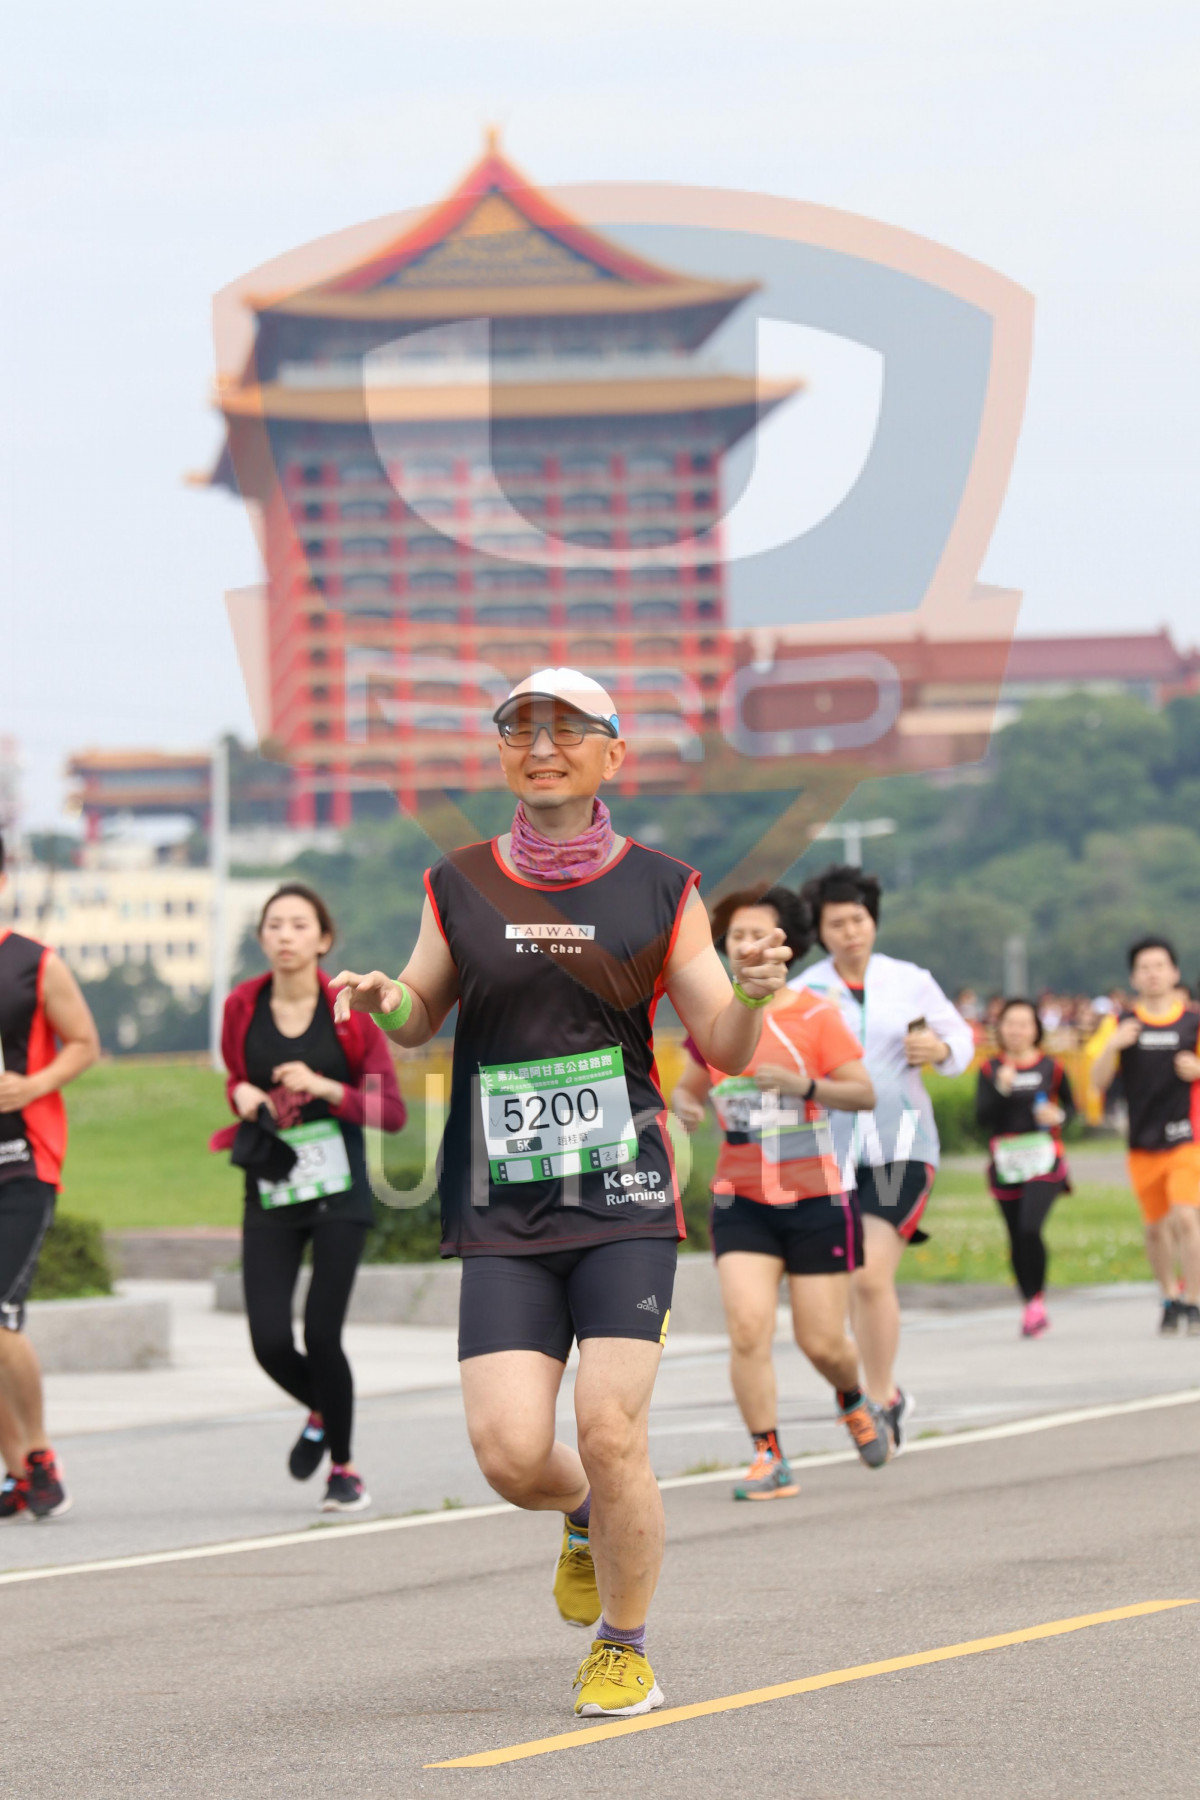 K.C. Chau,,5200,,Keep,Running|2018 第九屆阿甘盃公益路跑|Soryu Asuka Langley